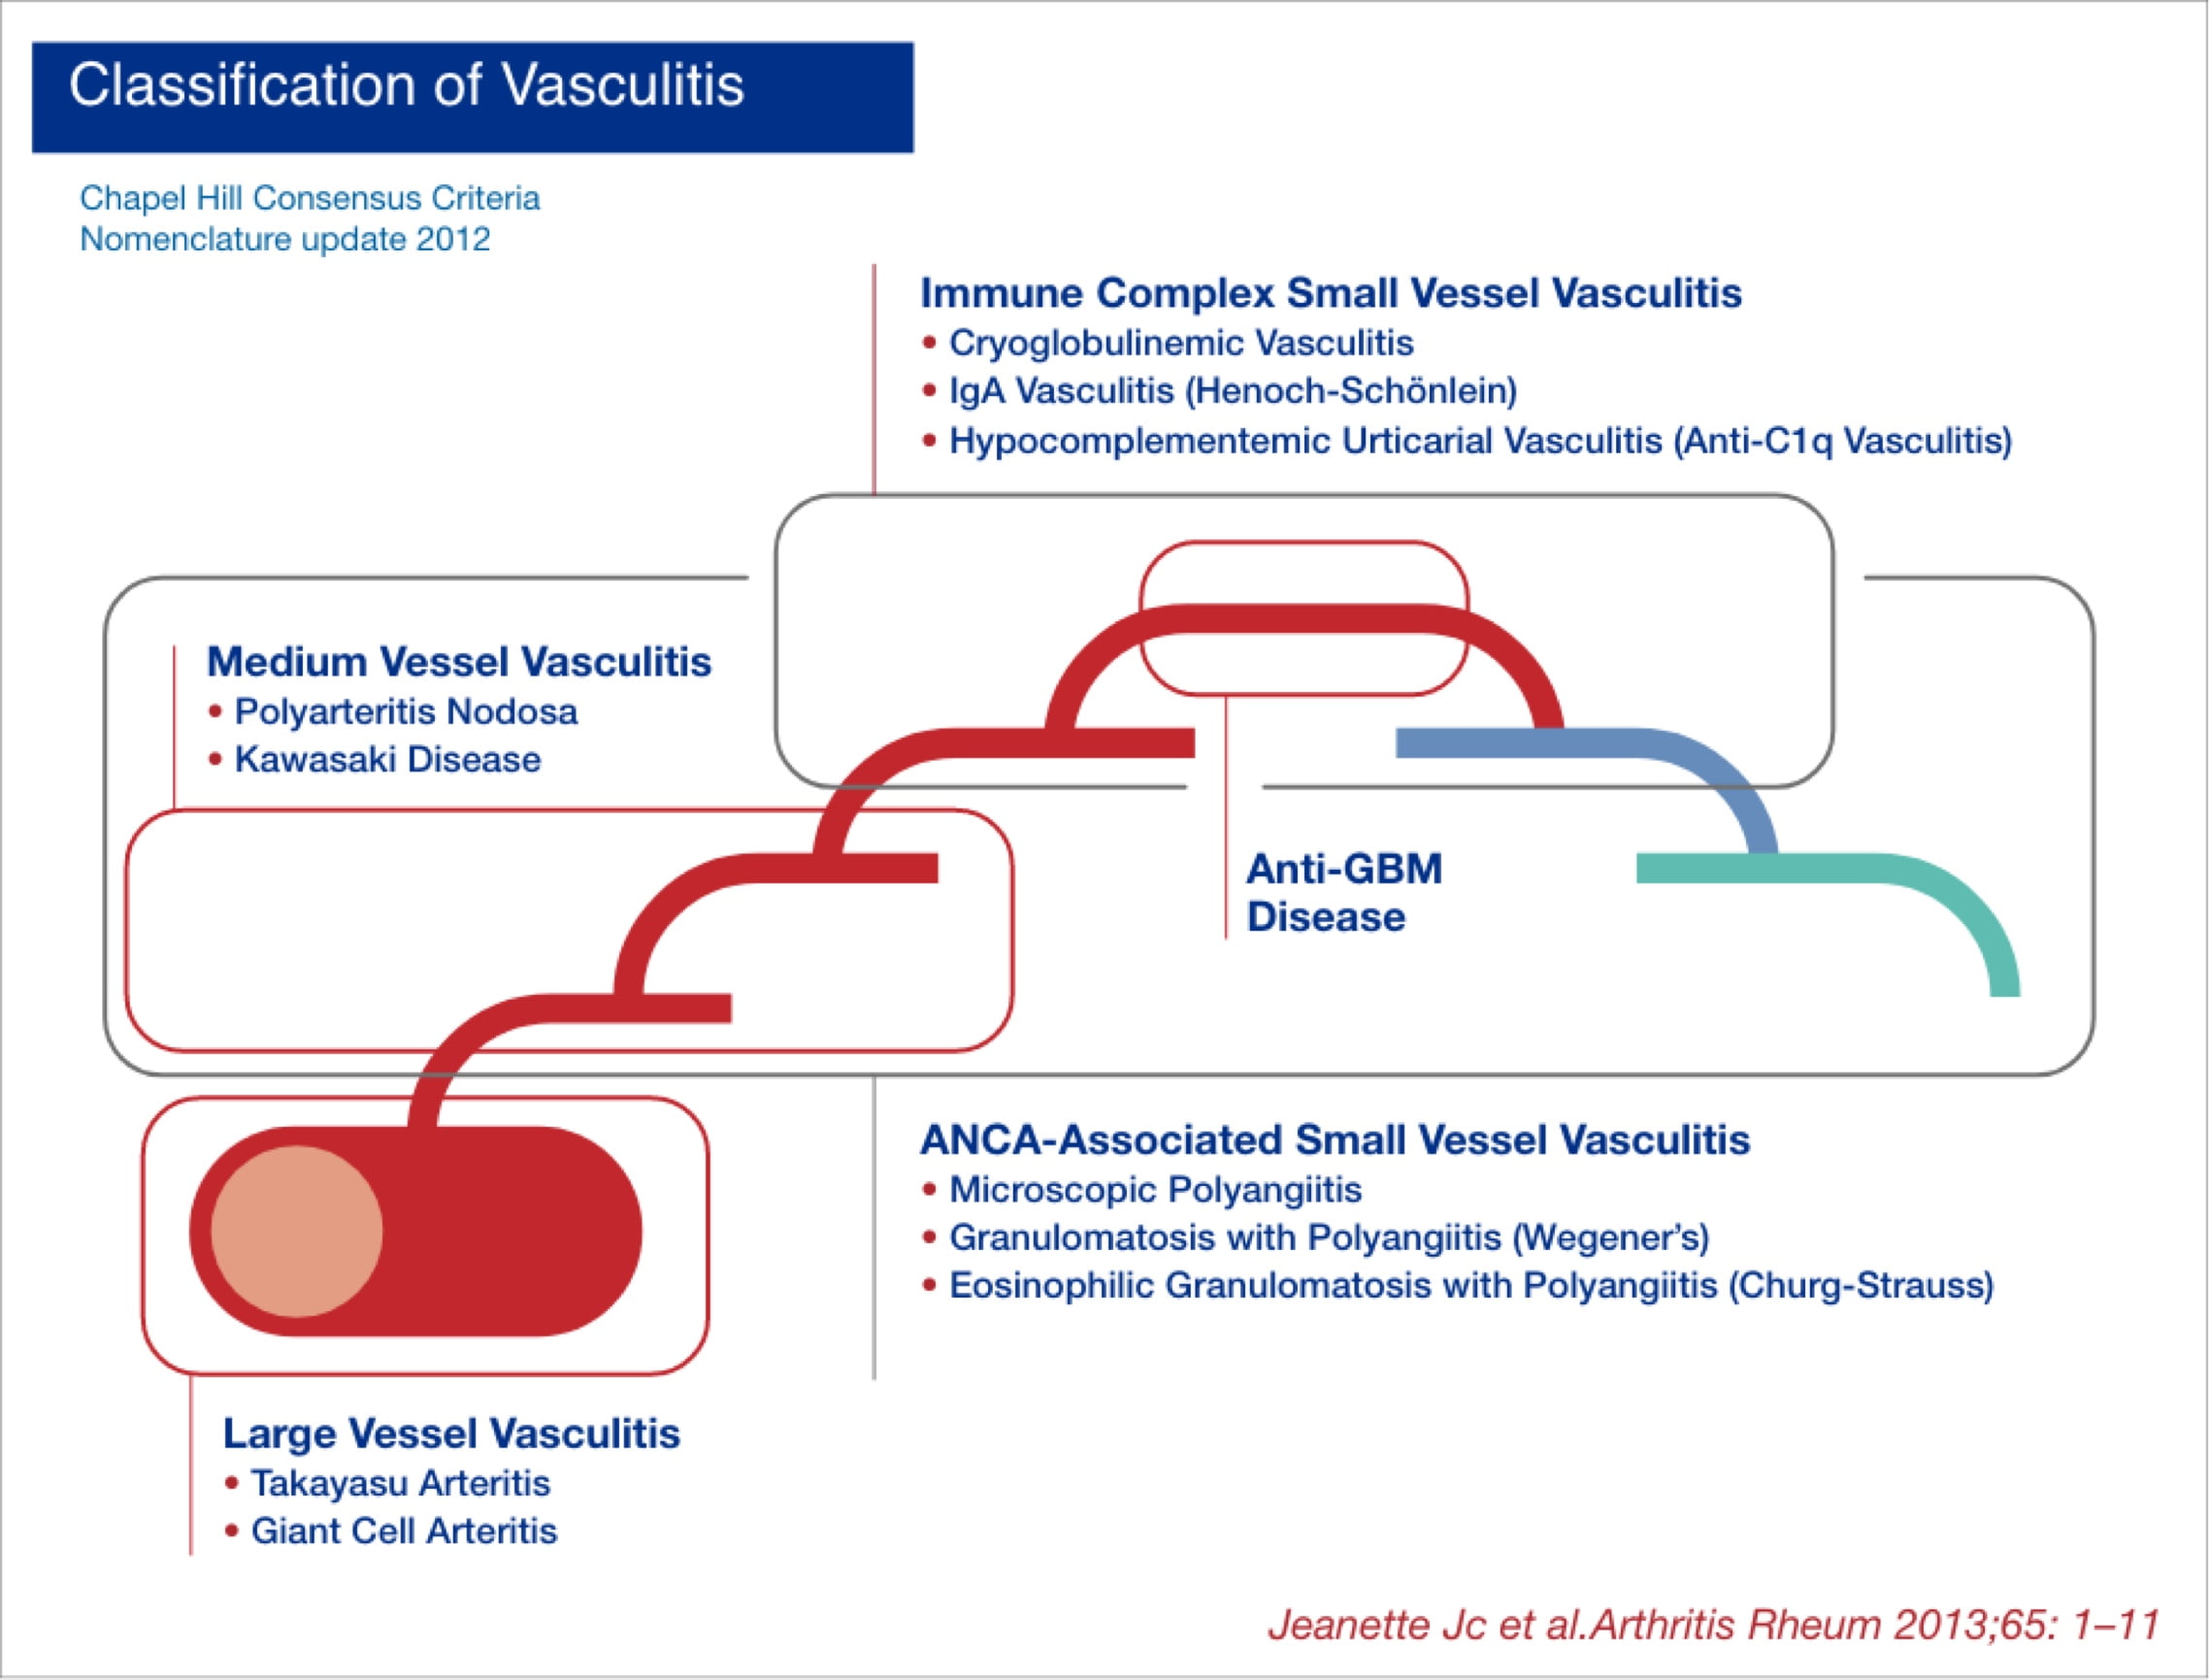 Classifying Types of Vasculitis